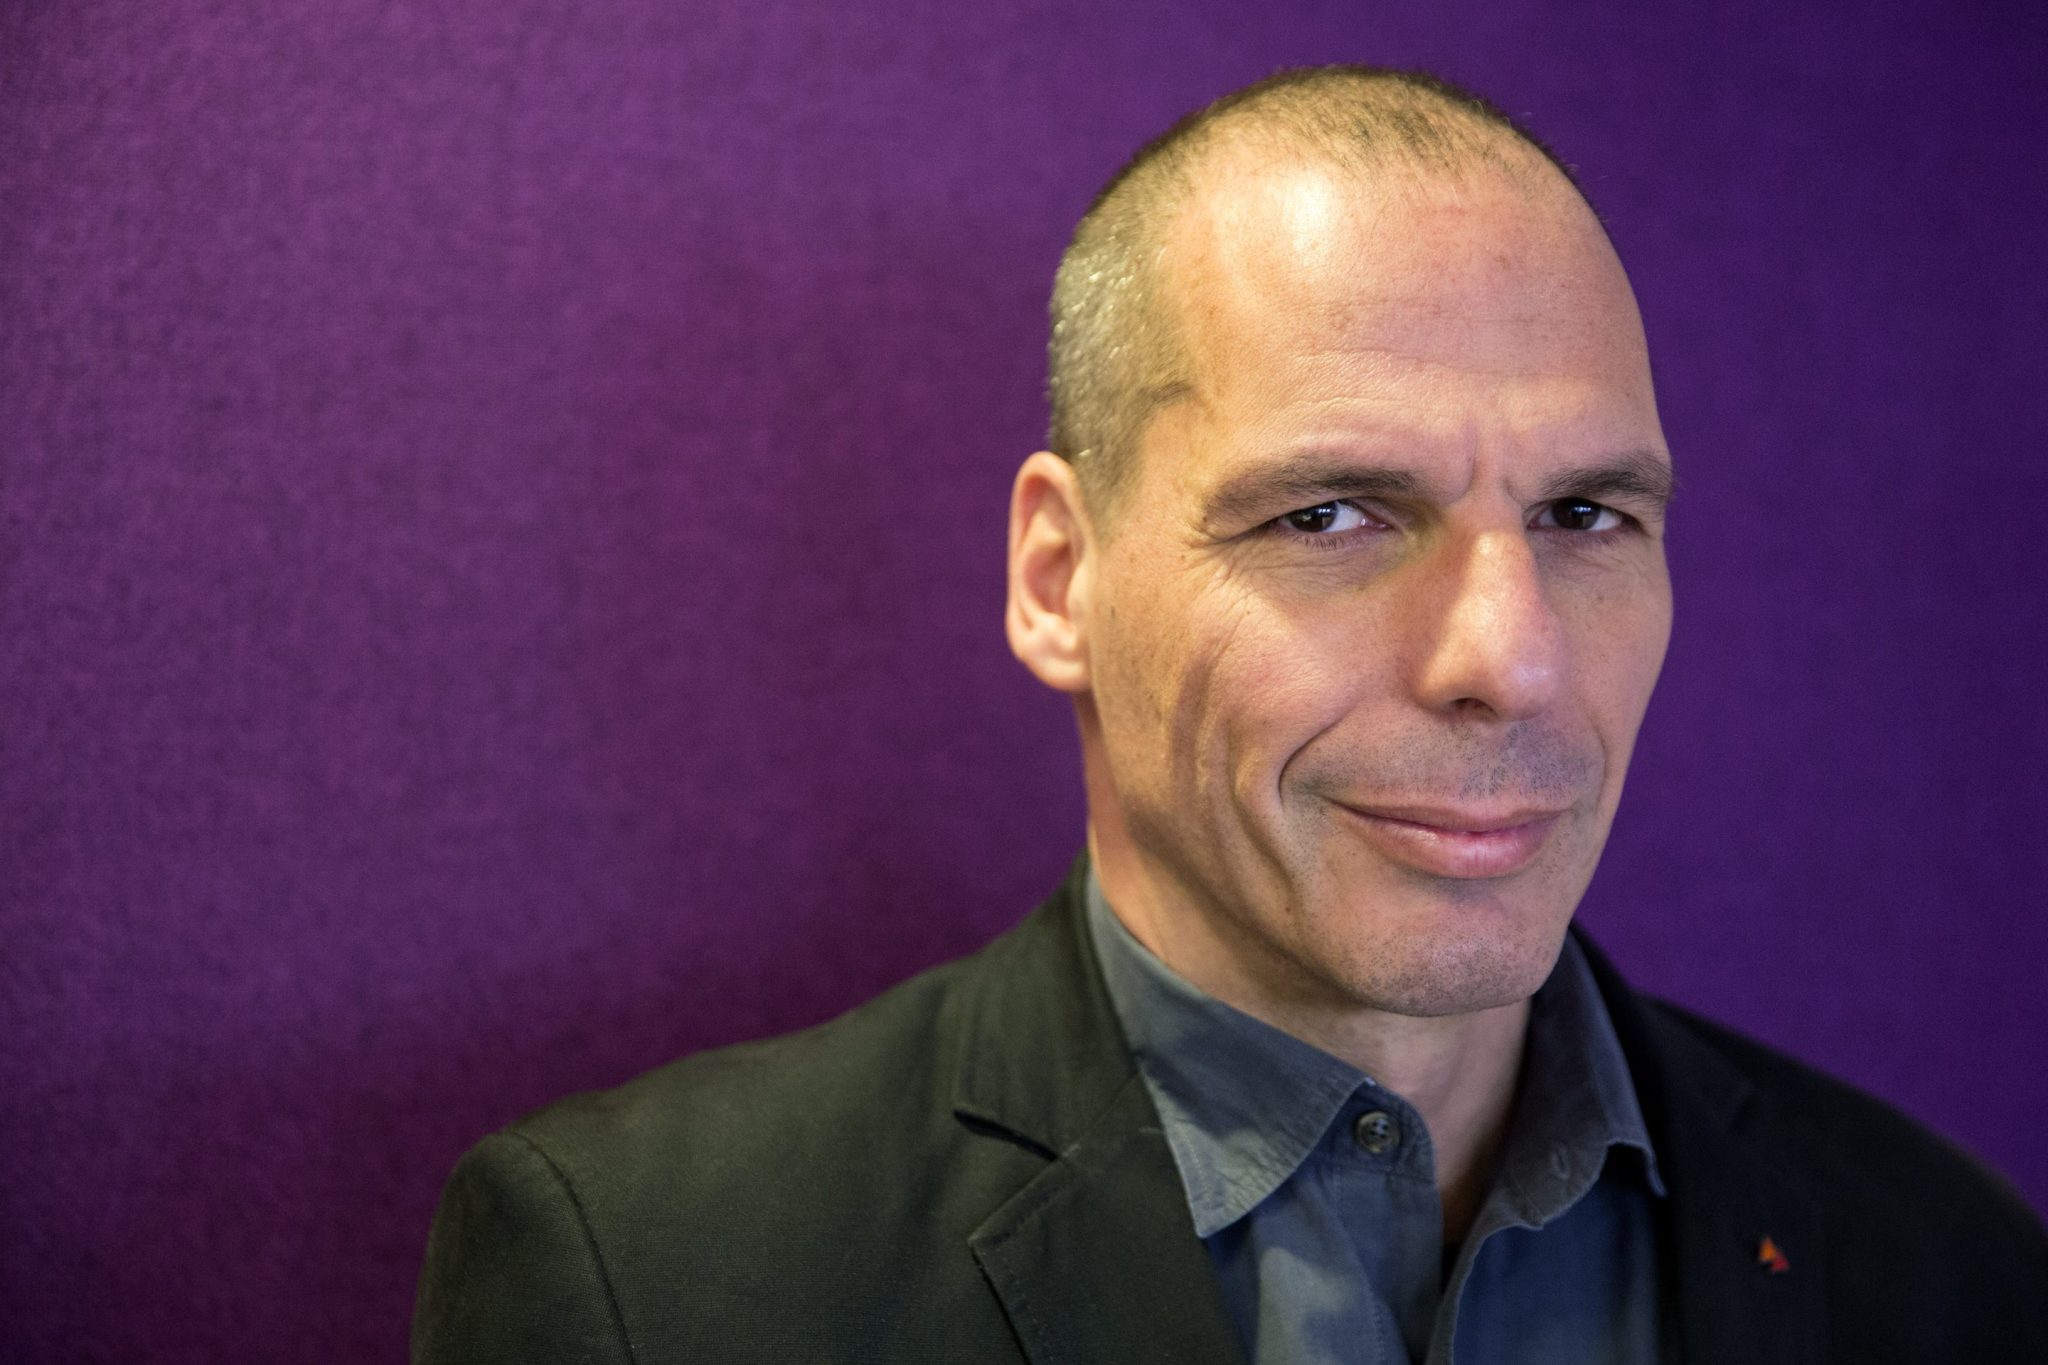 Yanis Varoufakis interview: ‘Technofeudalism’ author on Gen Z, Fortune 500, Big Tech, Gen Z